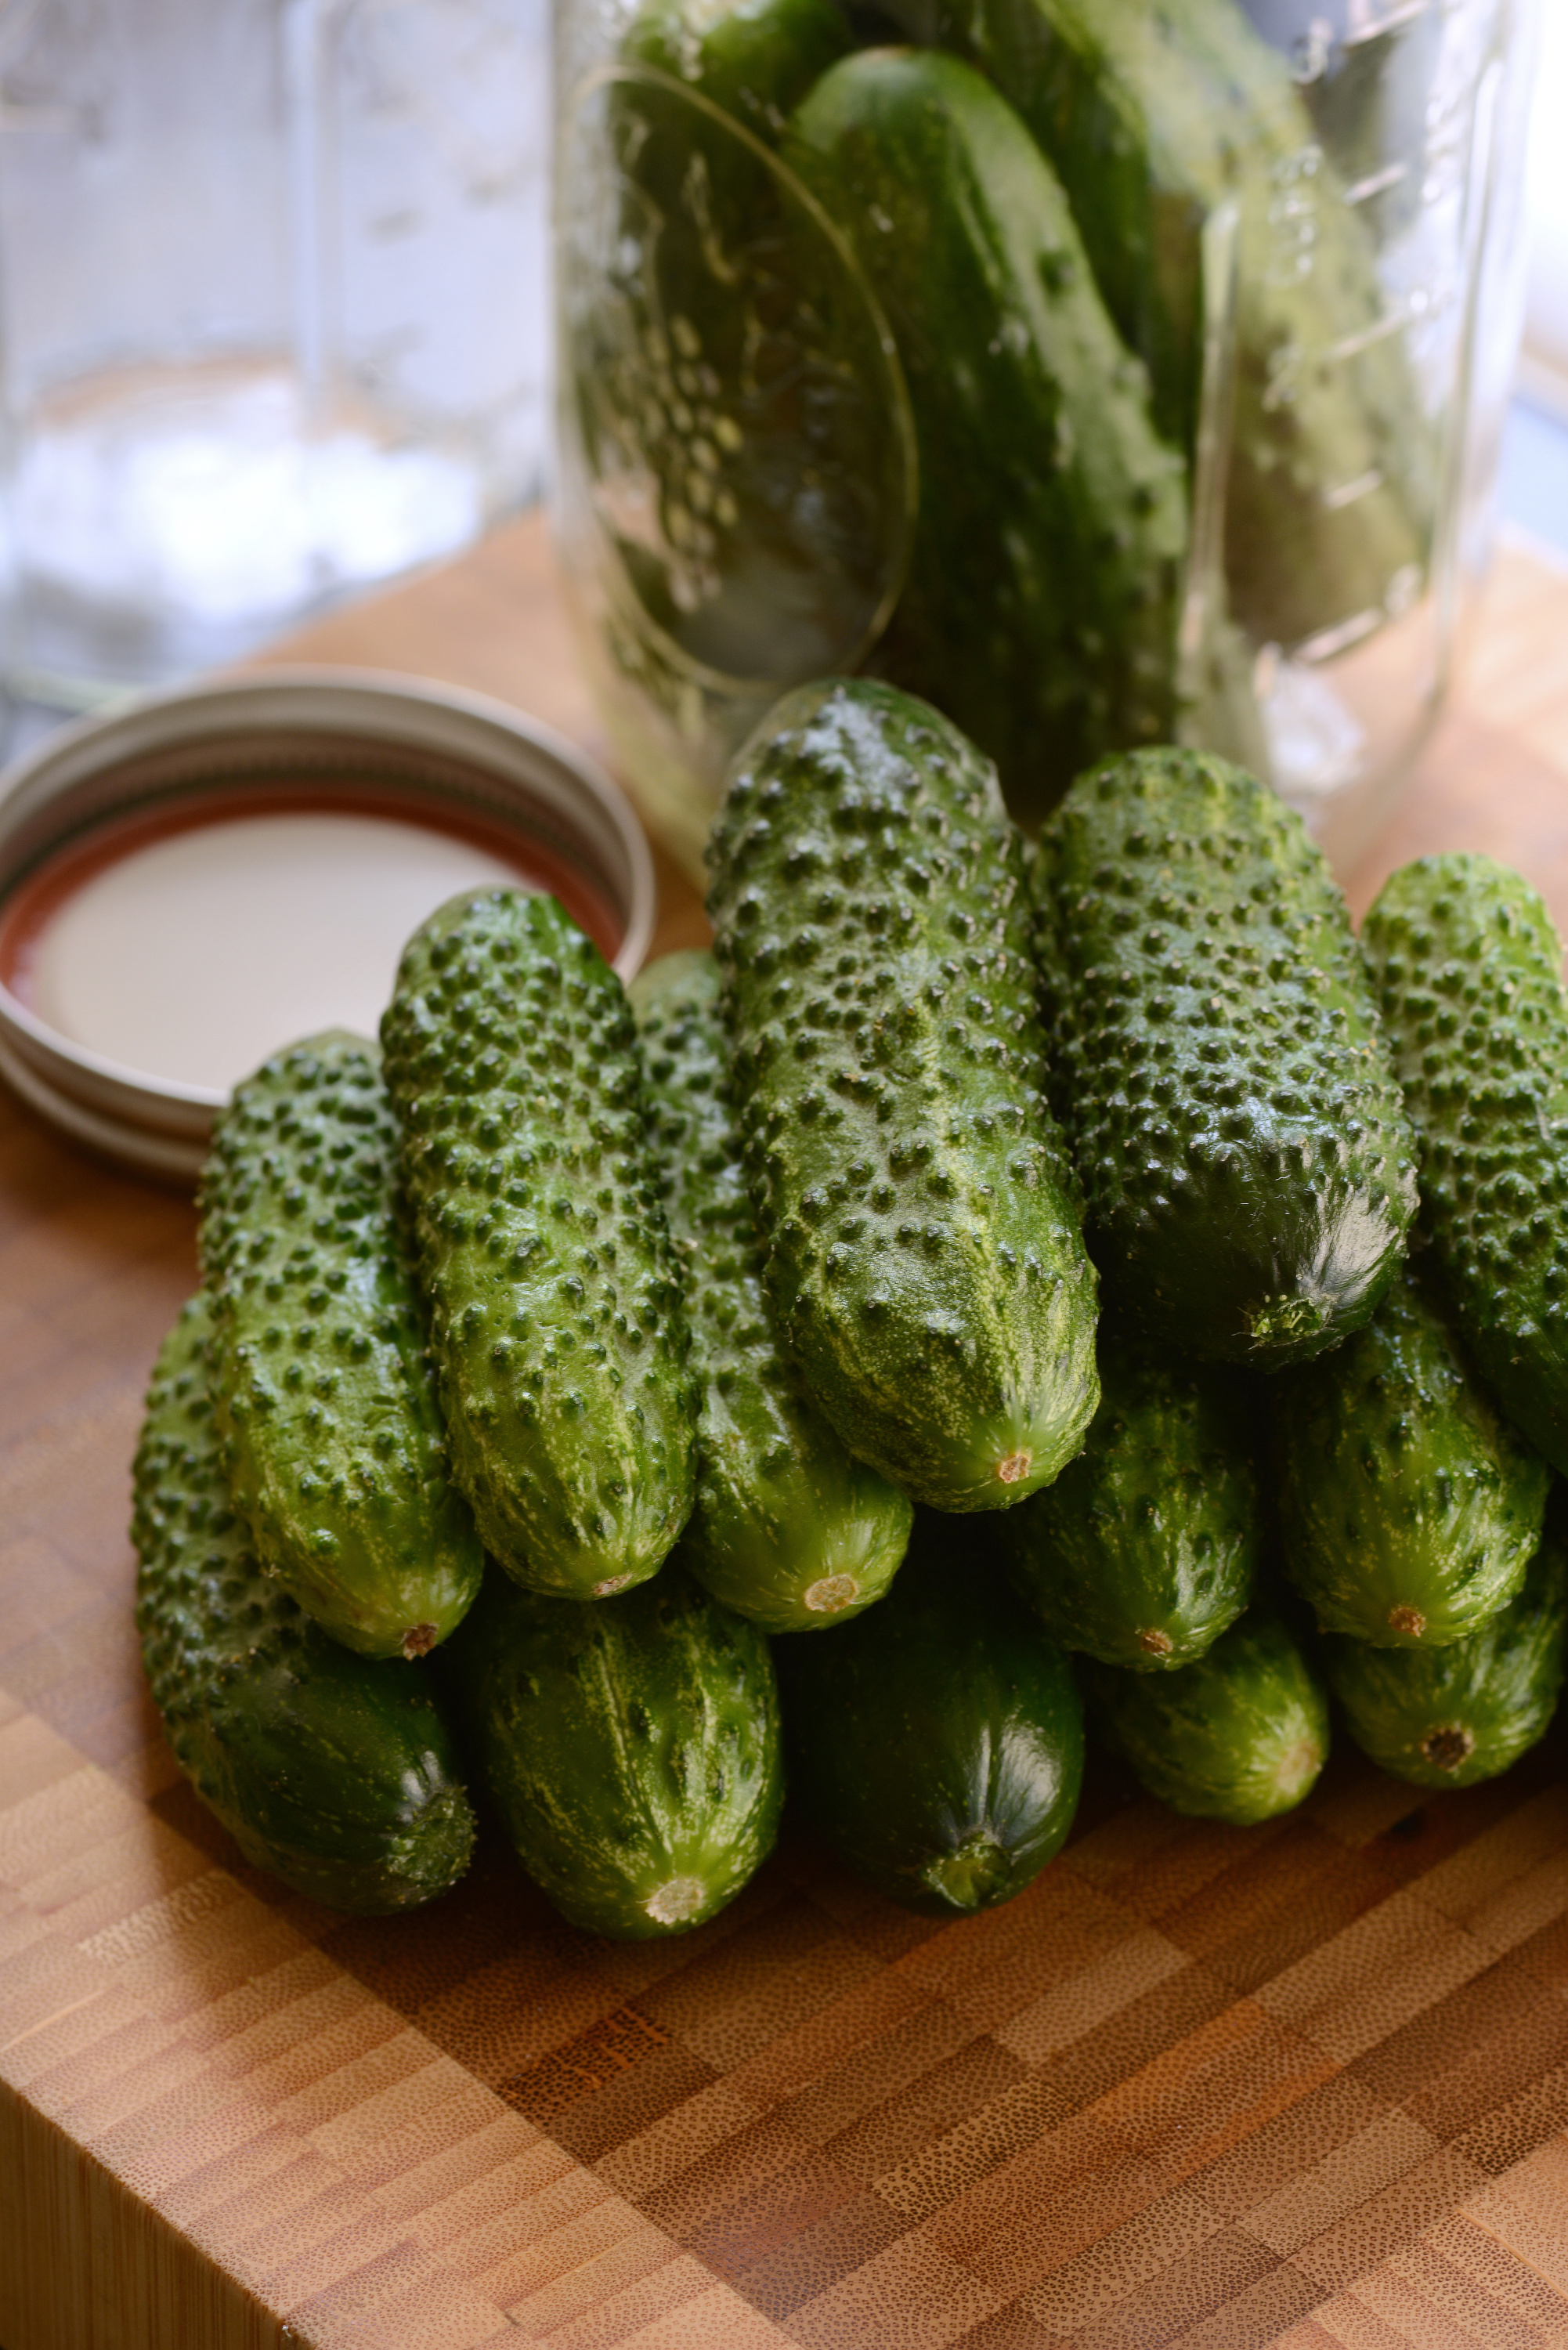 Cucumber - Gherking - pickling